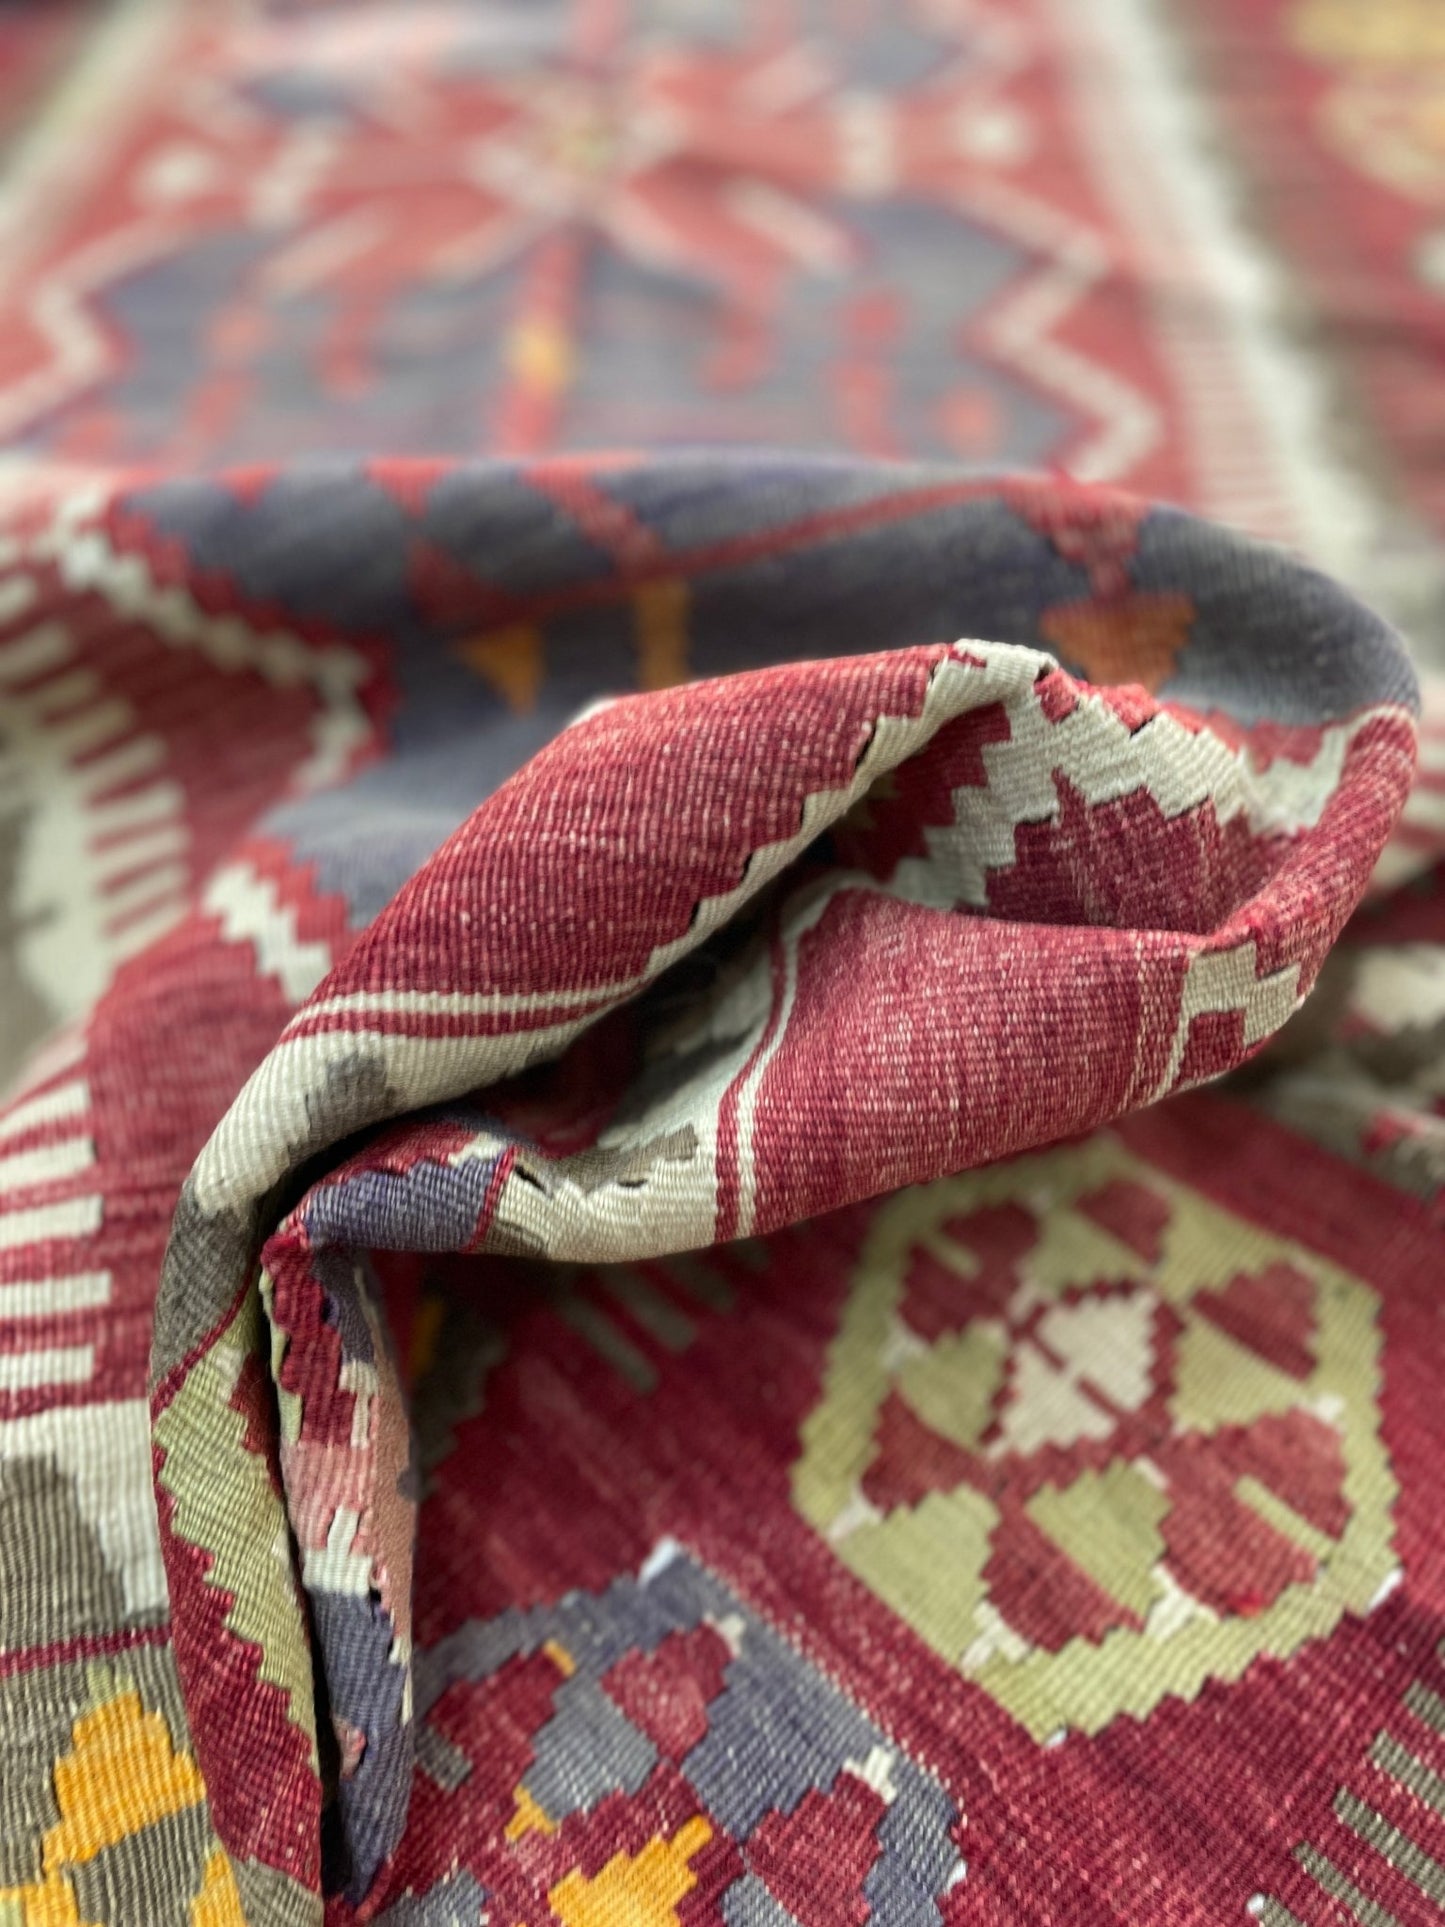 Konya vintage handmade wool turkish runner kilim rug shop san francisco bay area. Buy rug online free shipping